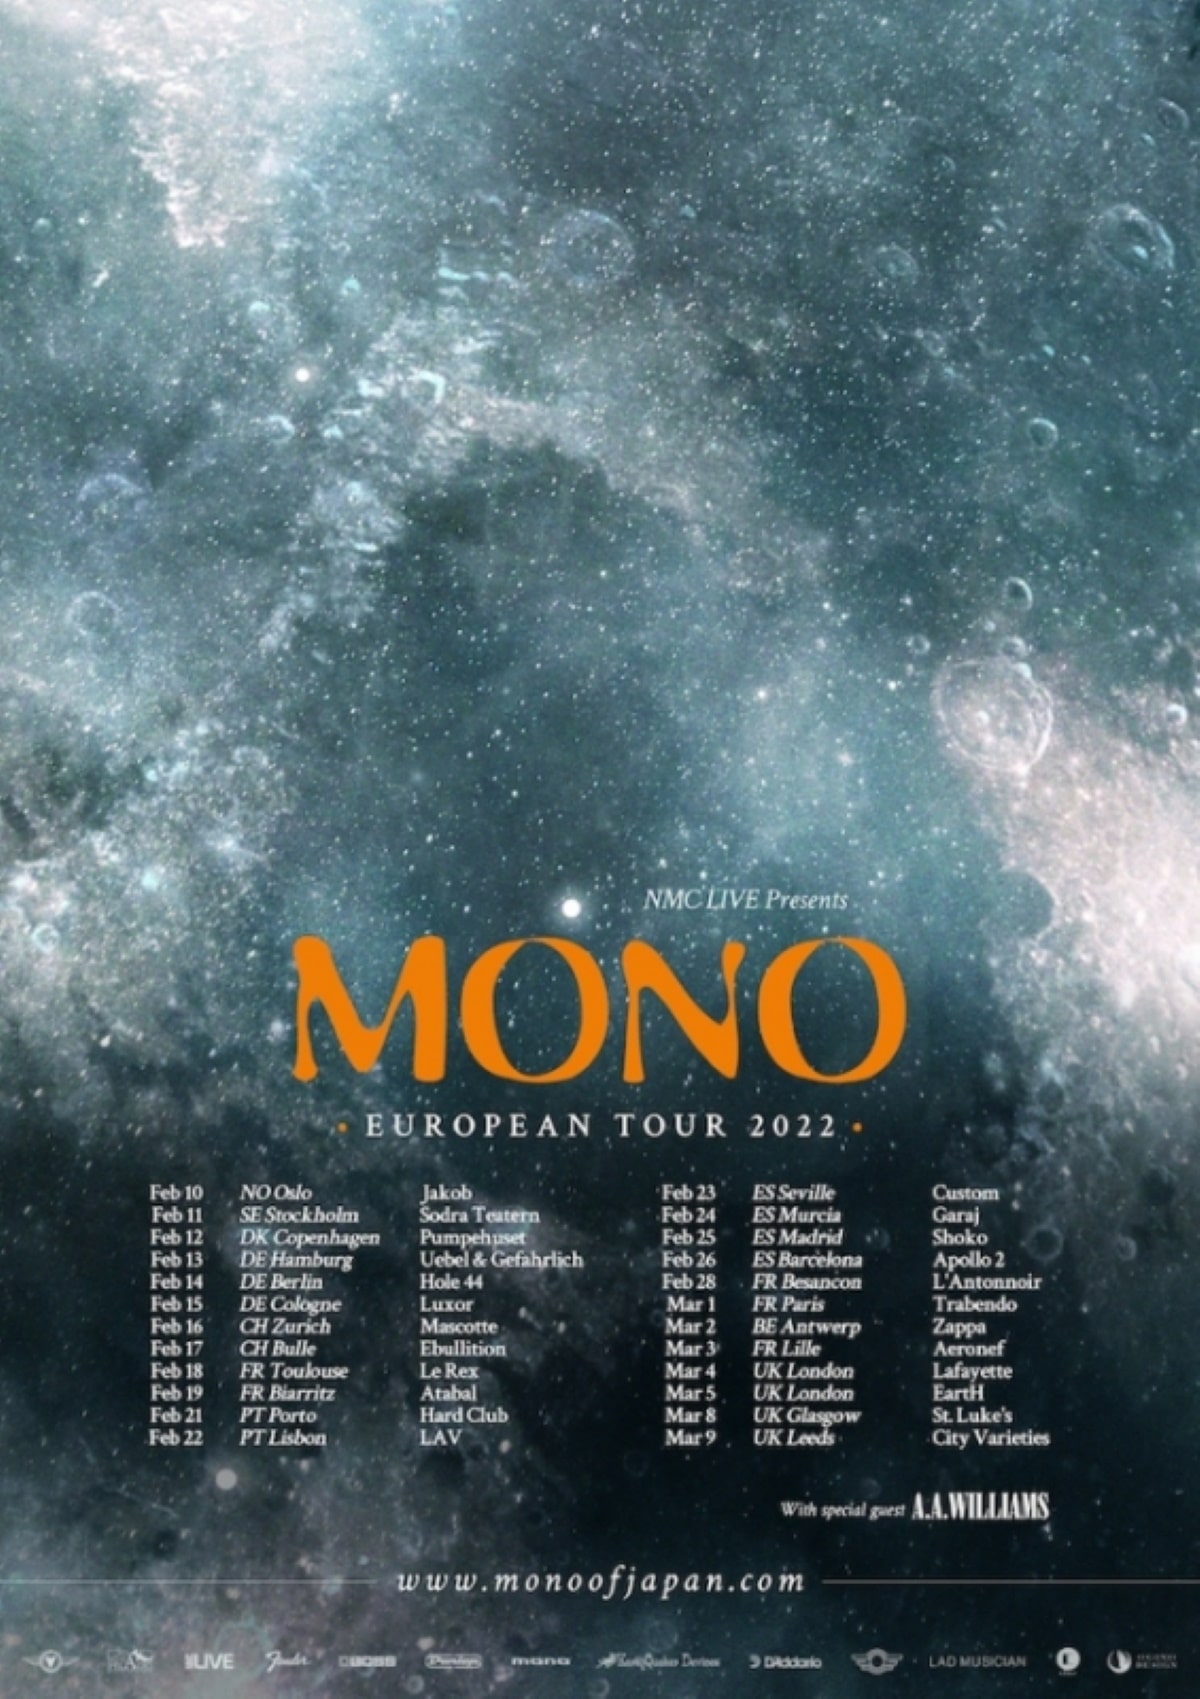 MONO dates